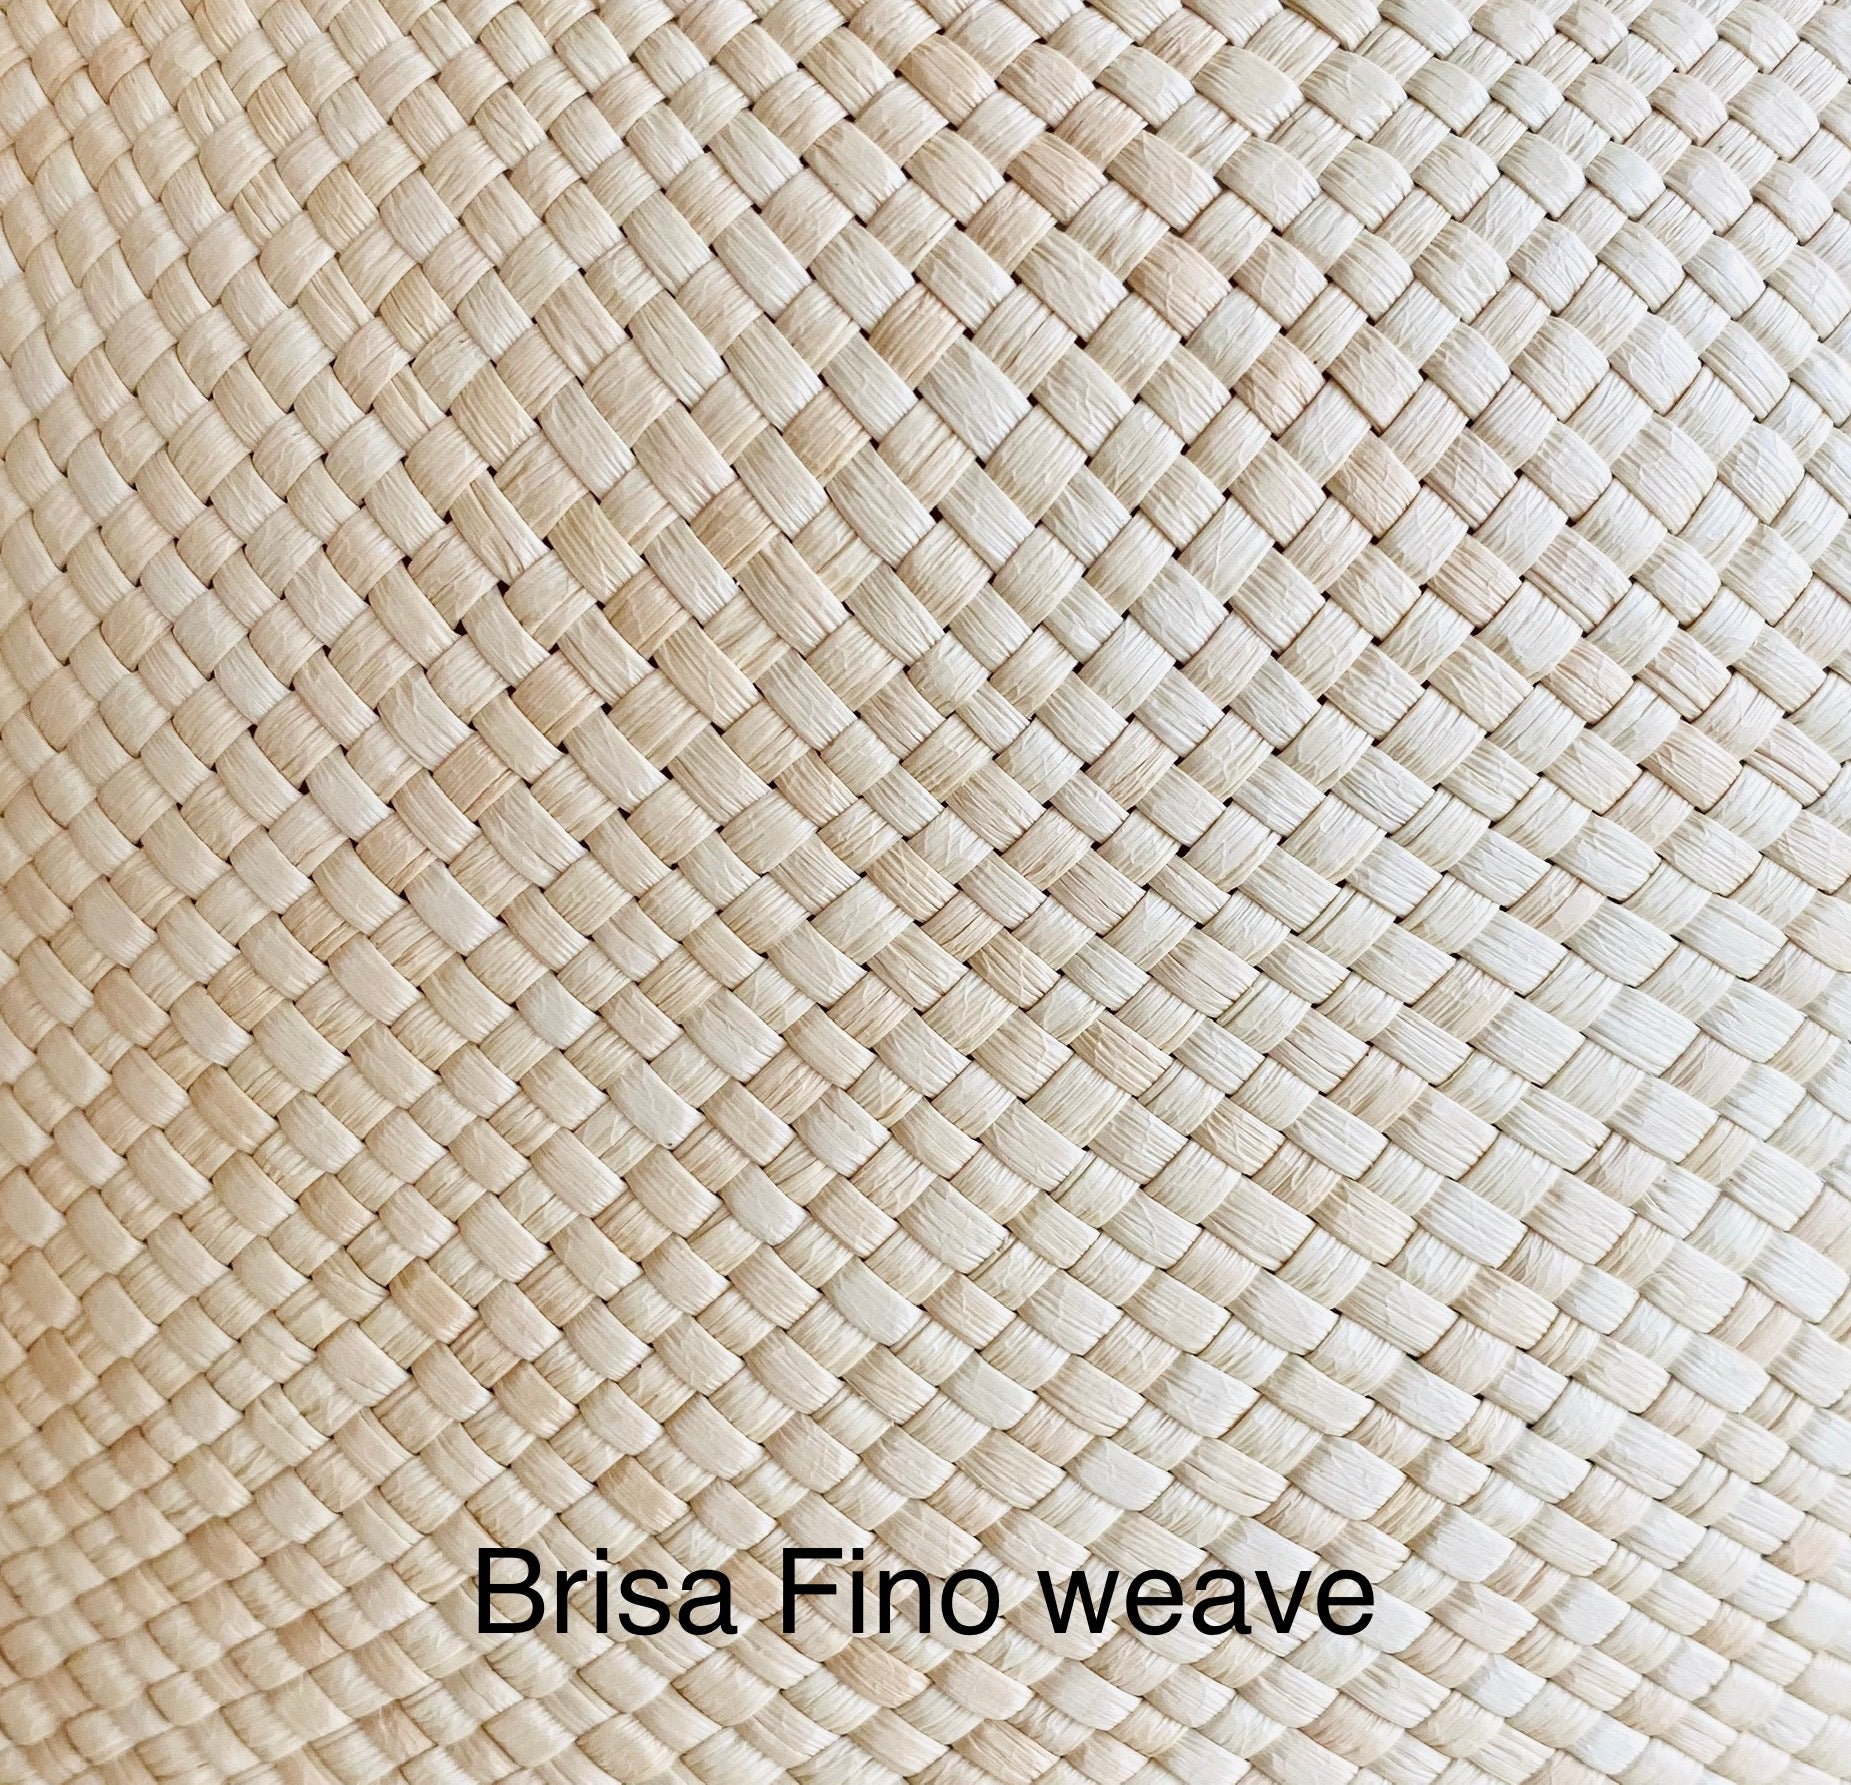 Brisa weave diamonds panama hat